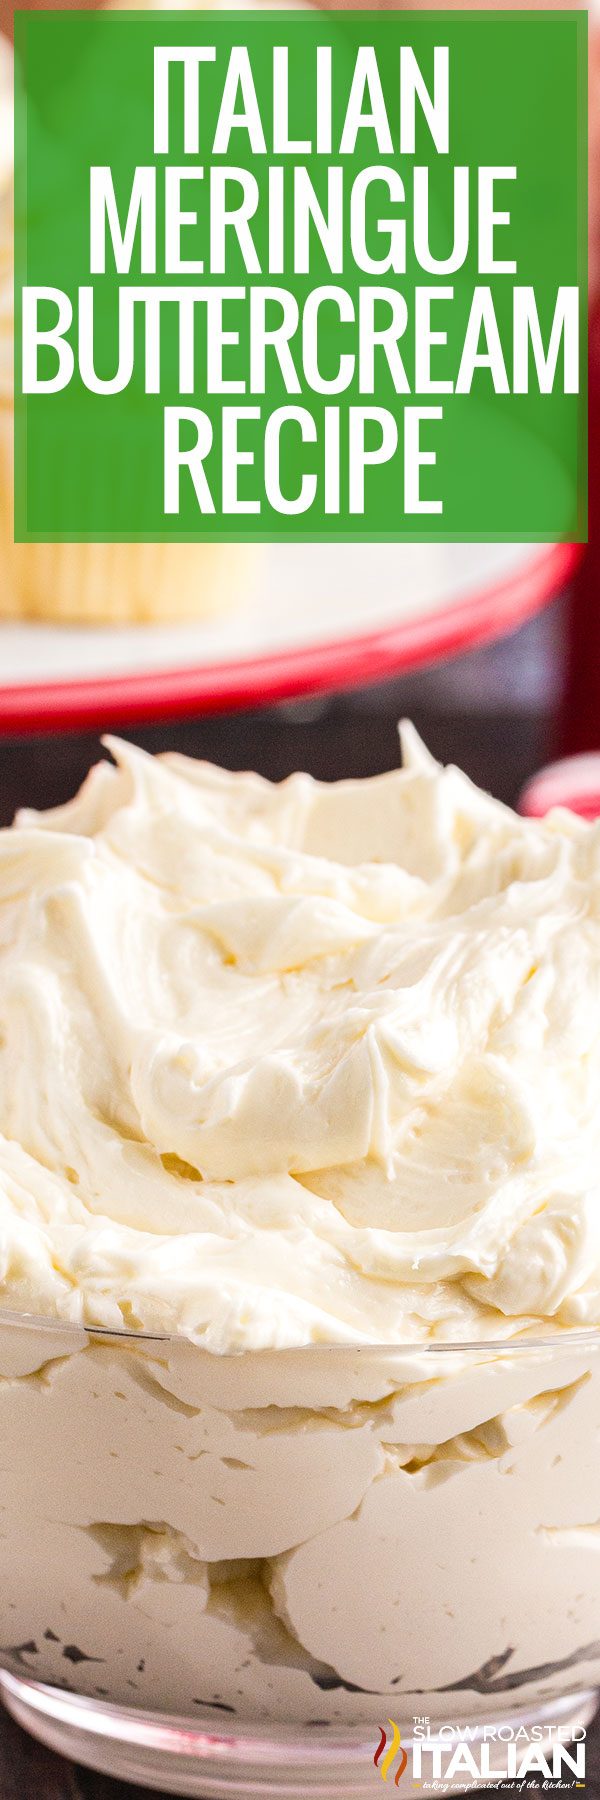 titled collage for meringue buttercream recipe